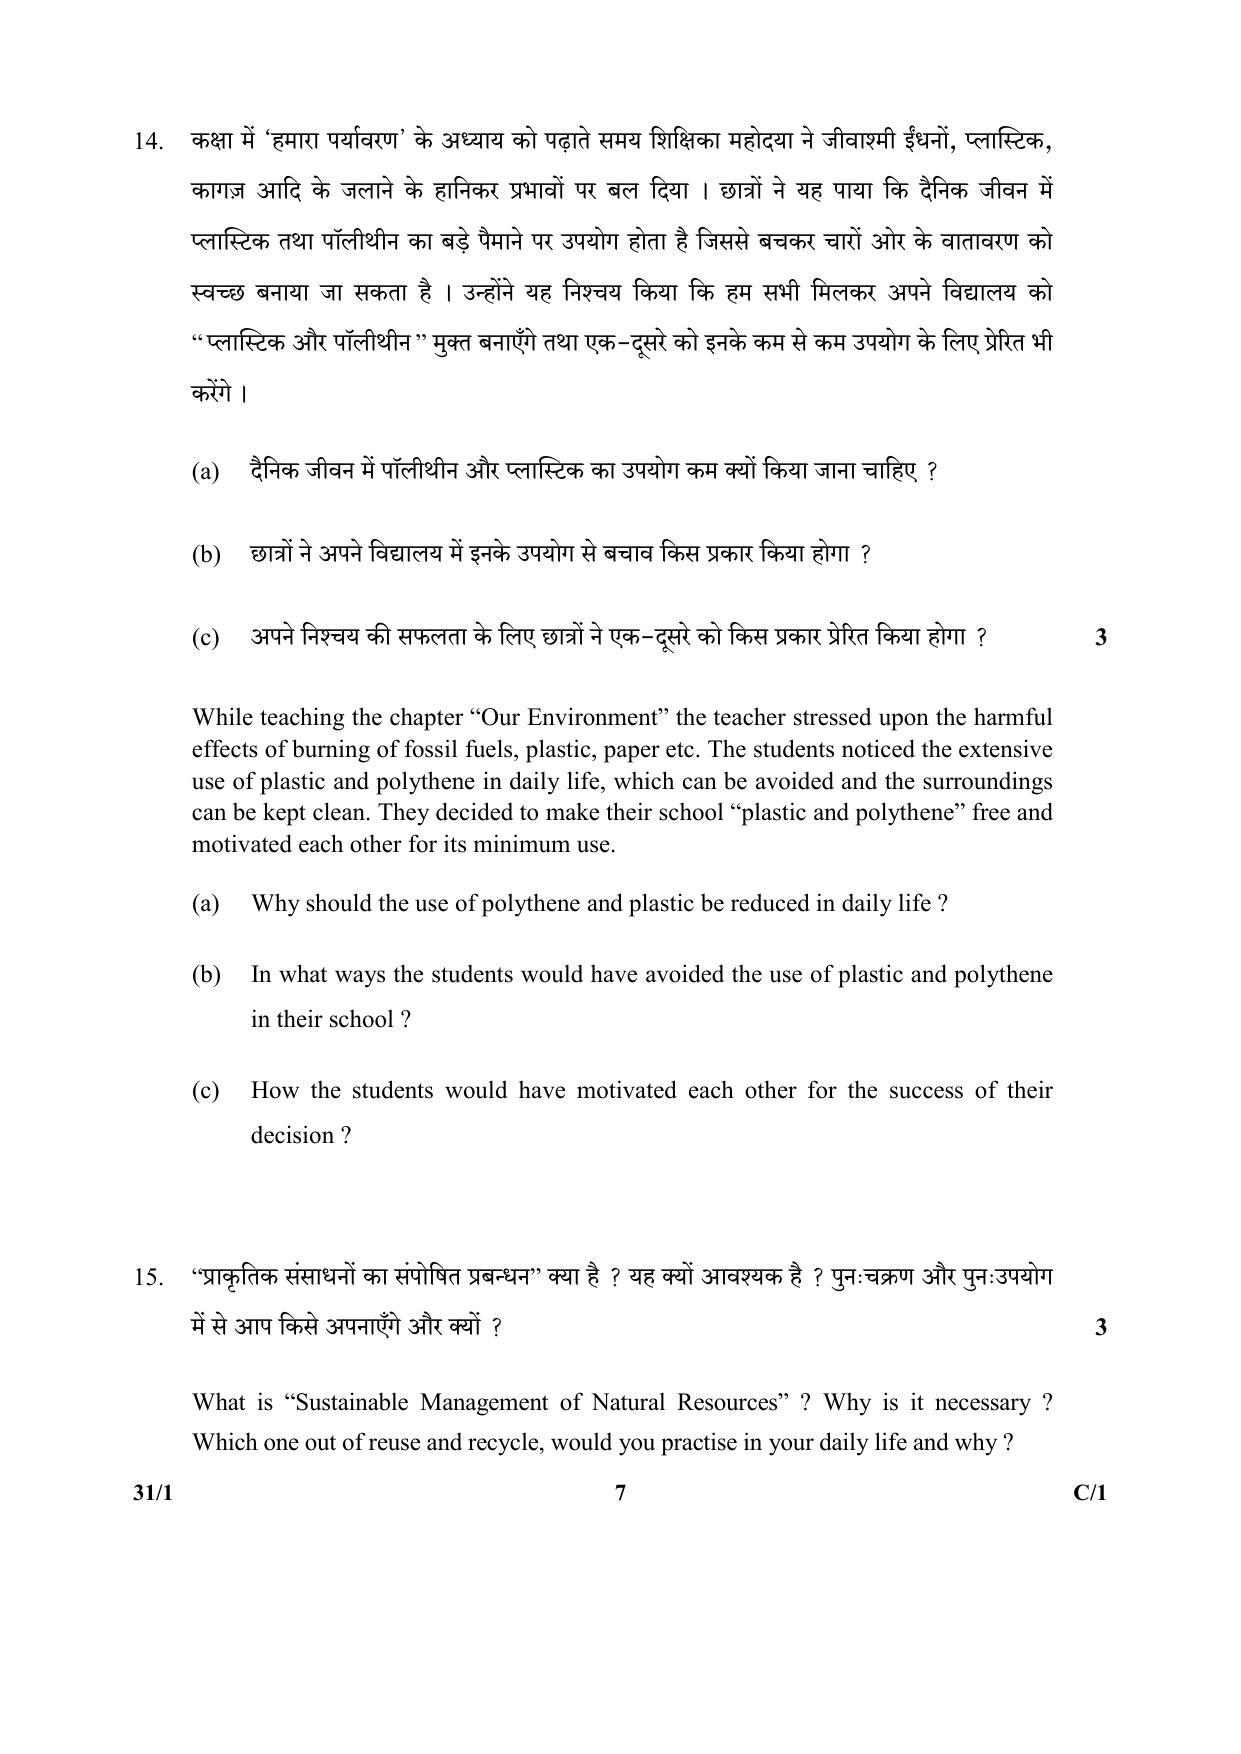 CBSE Class 10 41-1 Science PUNJABI VERSION 2018 Compartment Question Paper - Page 15